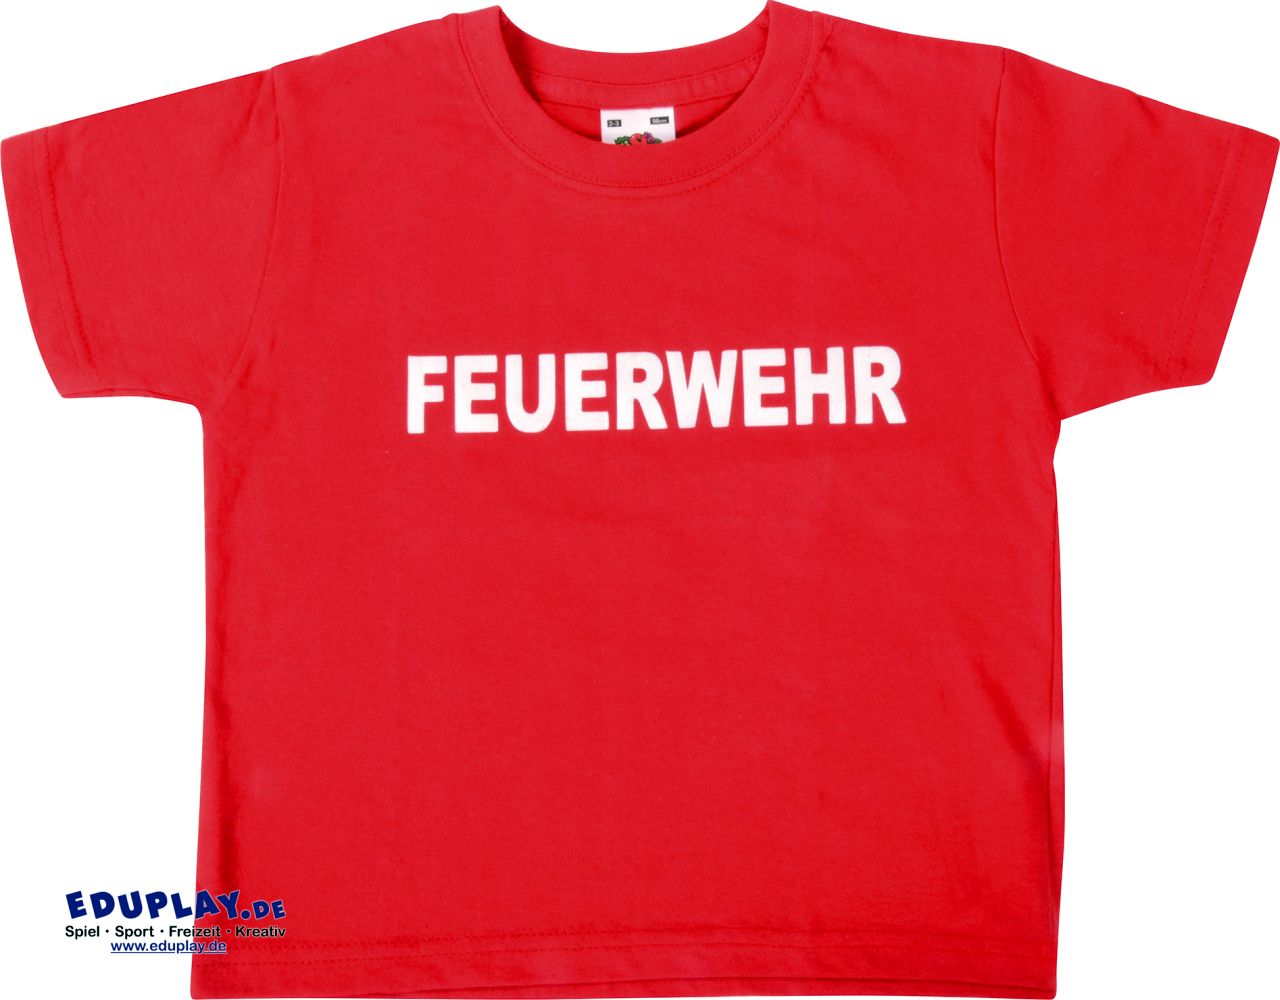 Eduplay T-Shirt Feuerwehr Rot, Gr. 116